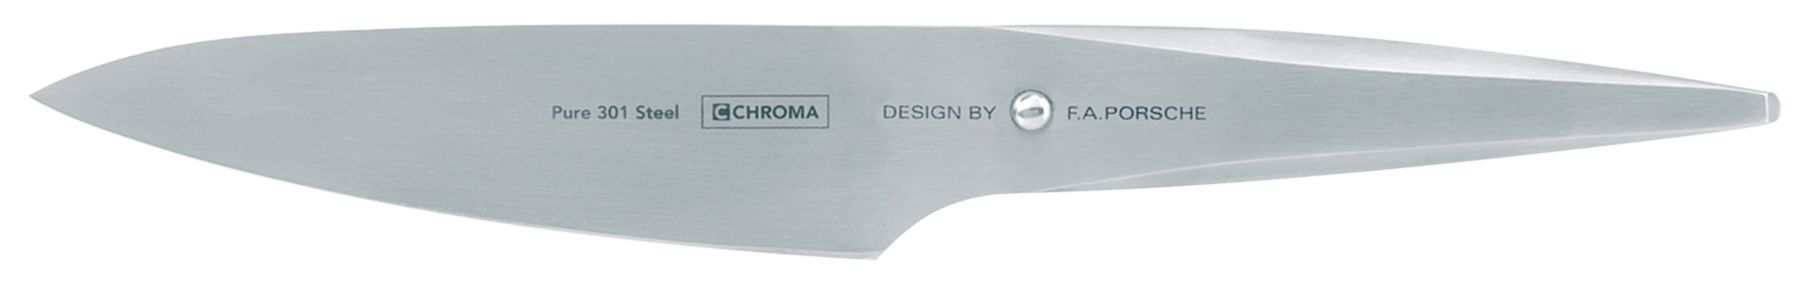 Couteau utilitaire 14,2 cm Chroma type 301